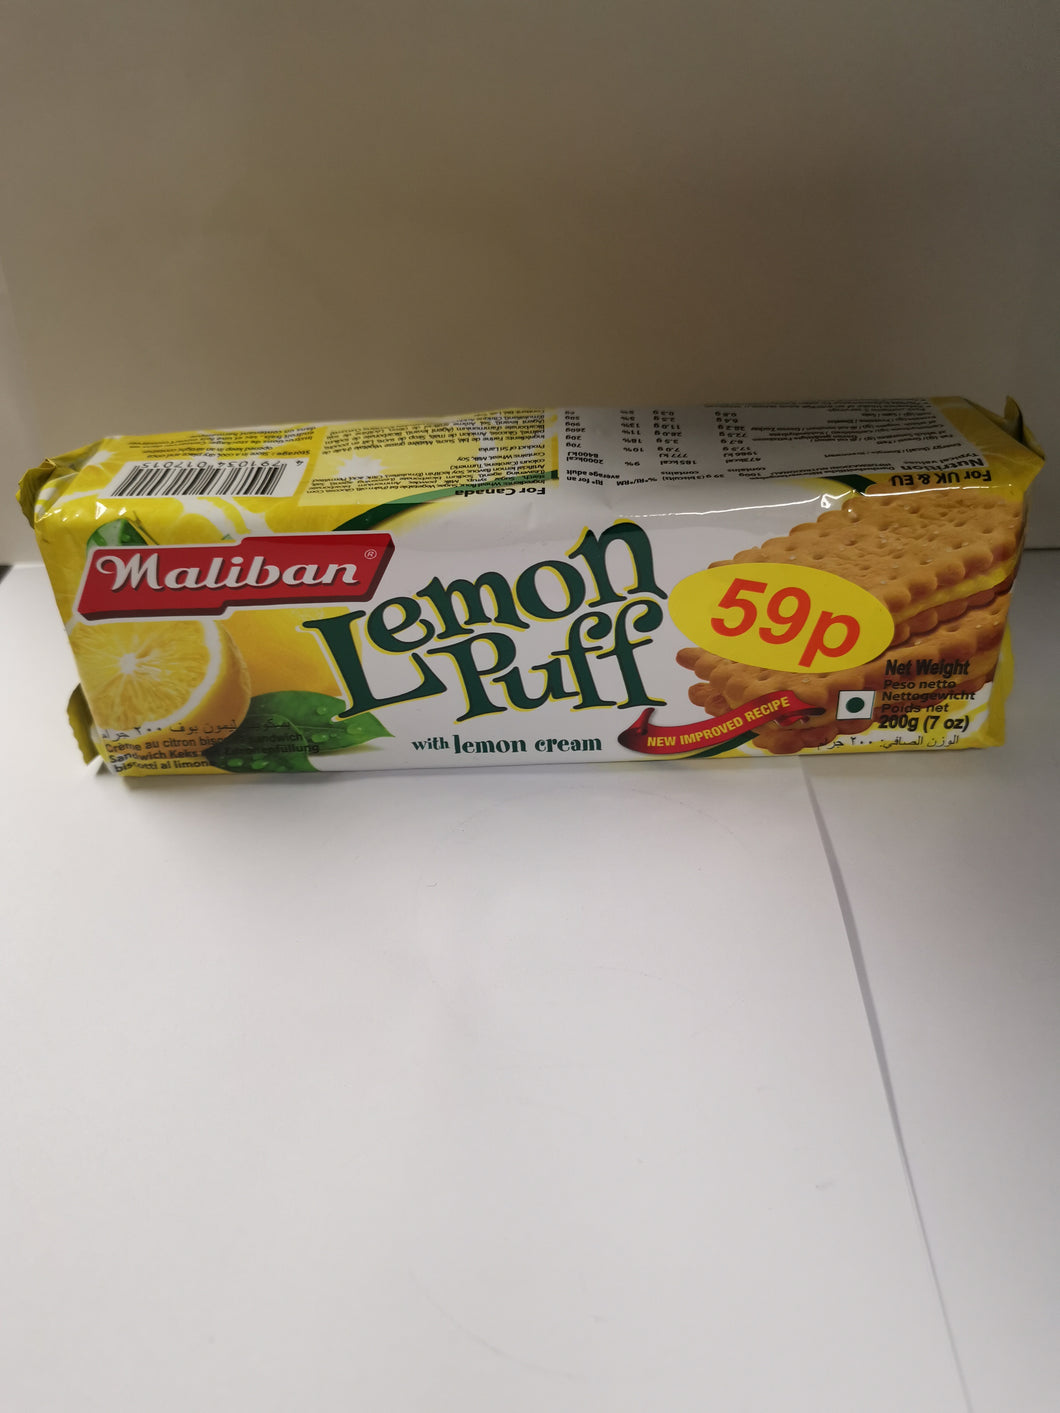 Maliban Lemon Puff with lemon cream